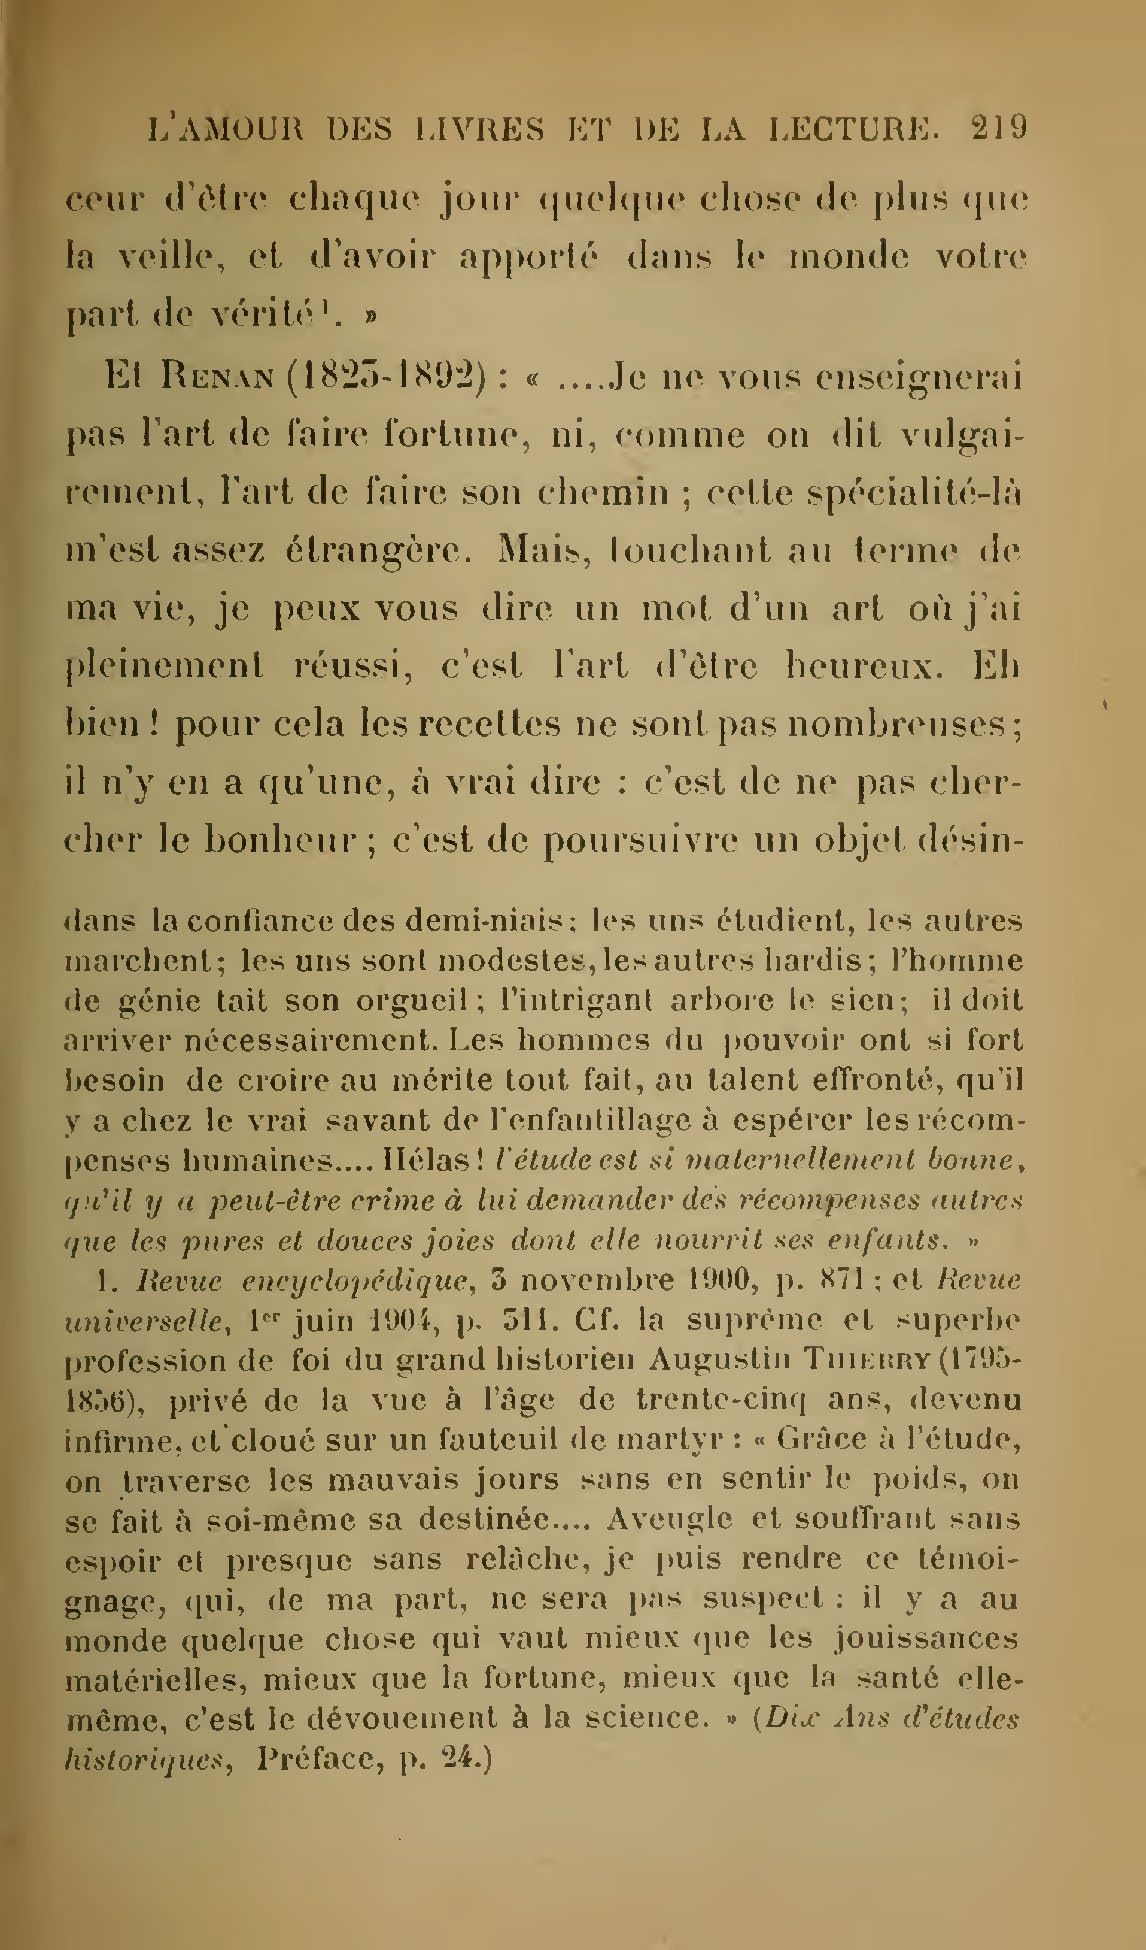 Albert Cim, Le Livre, t. I, p. 219.